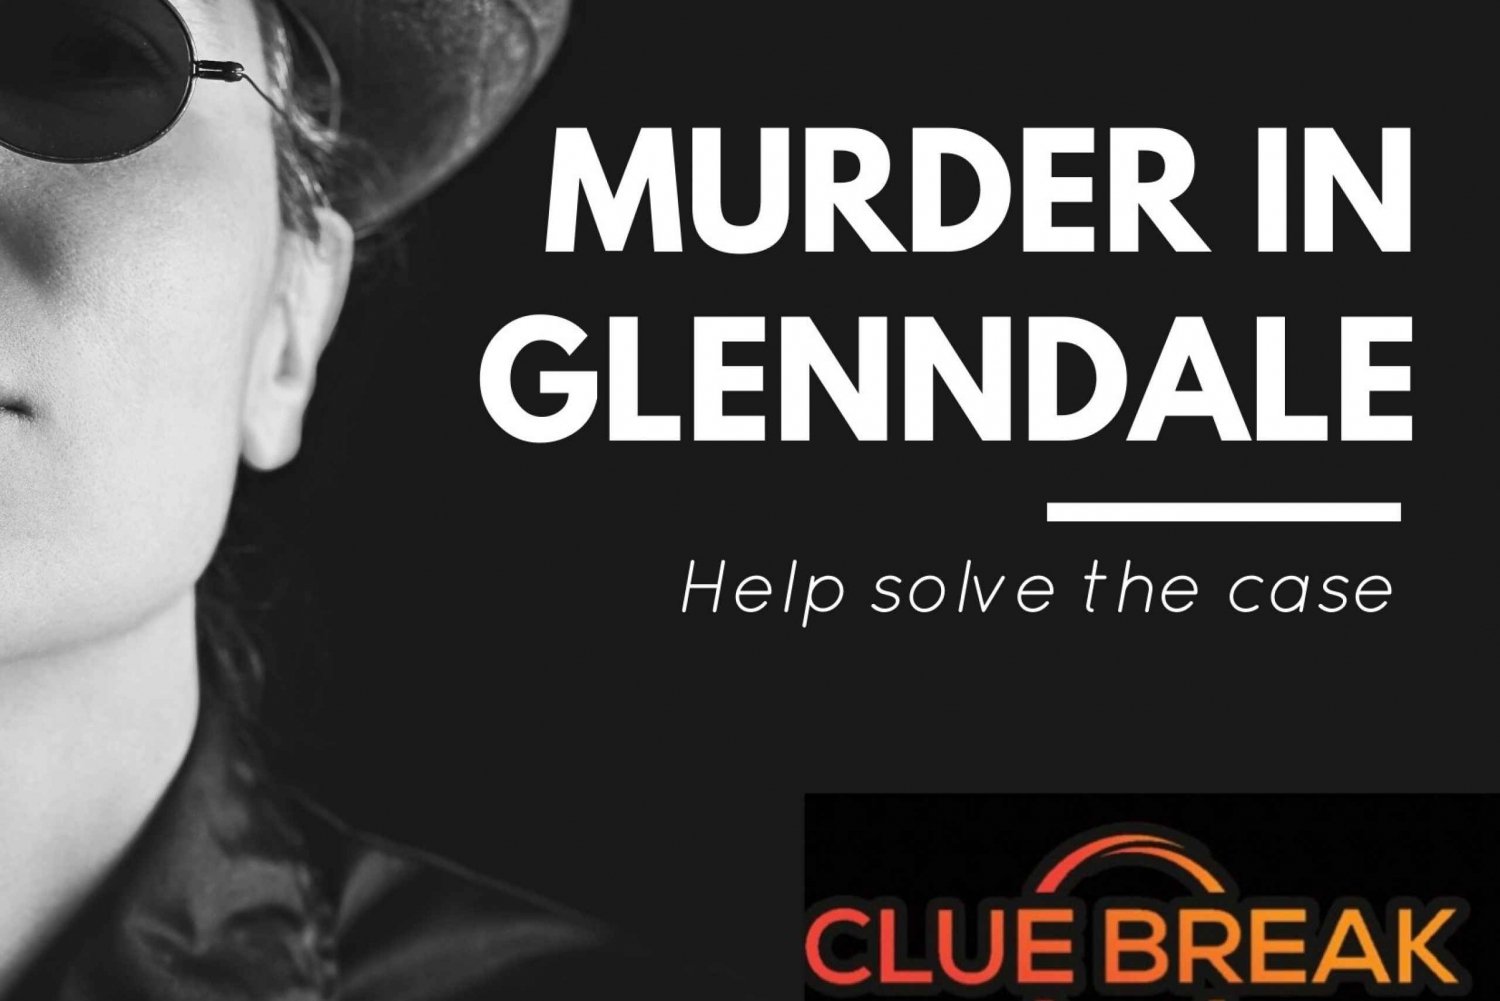 Dublin: Murder Mystery City gra eksploracyjna